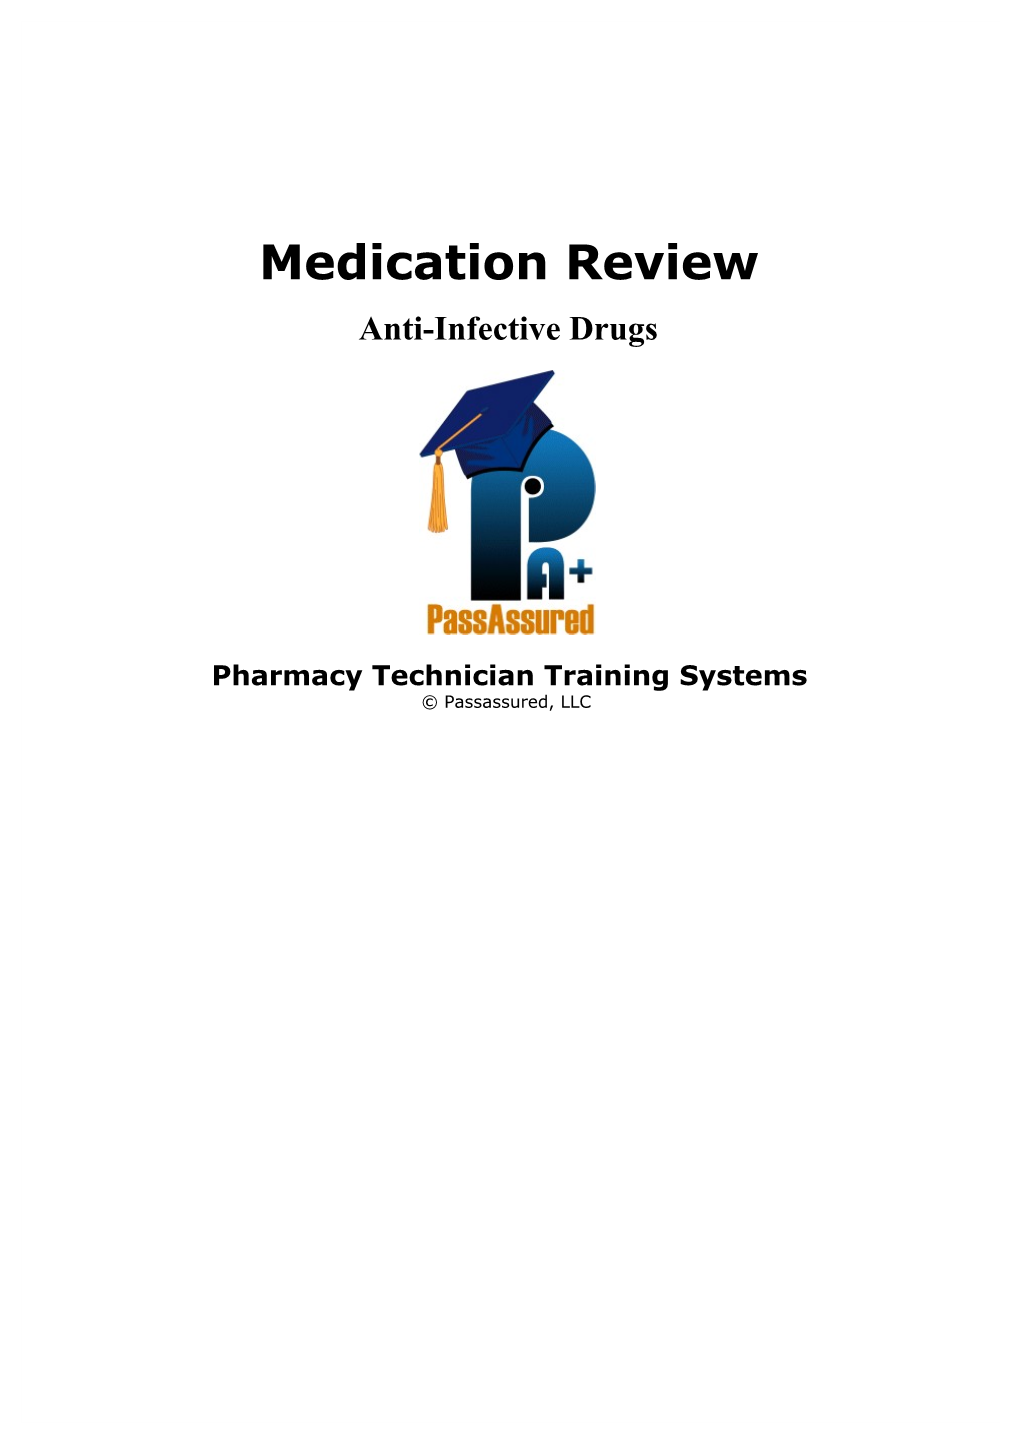 Pass Assured's Pharmacy Technician Training Program